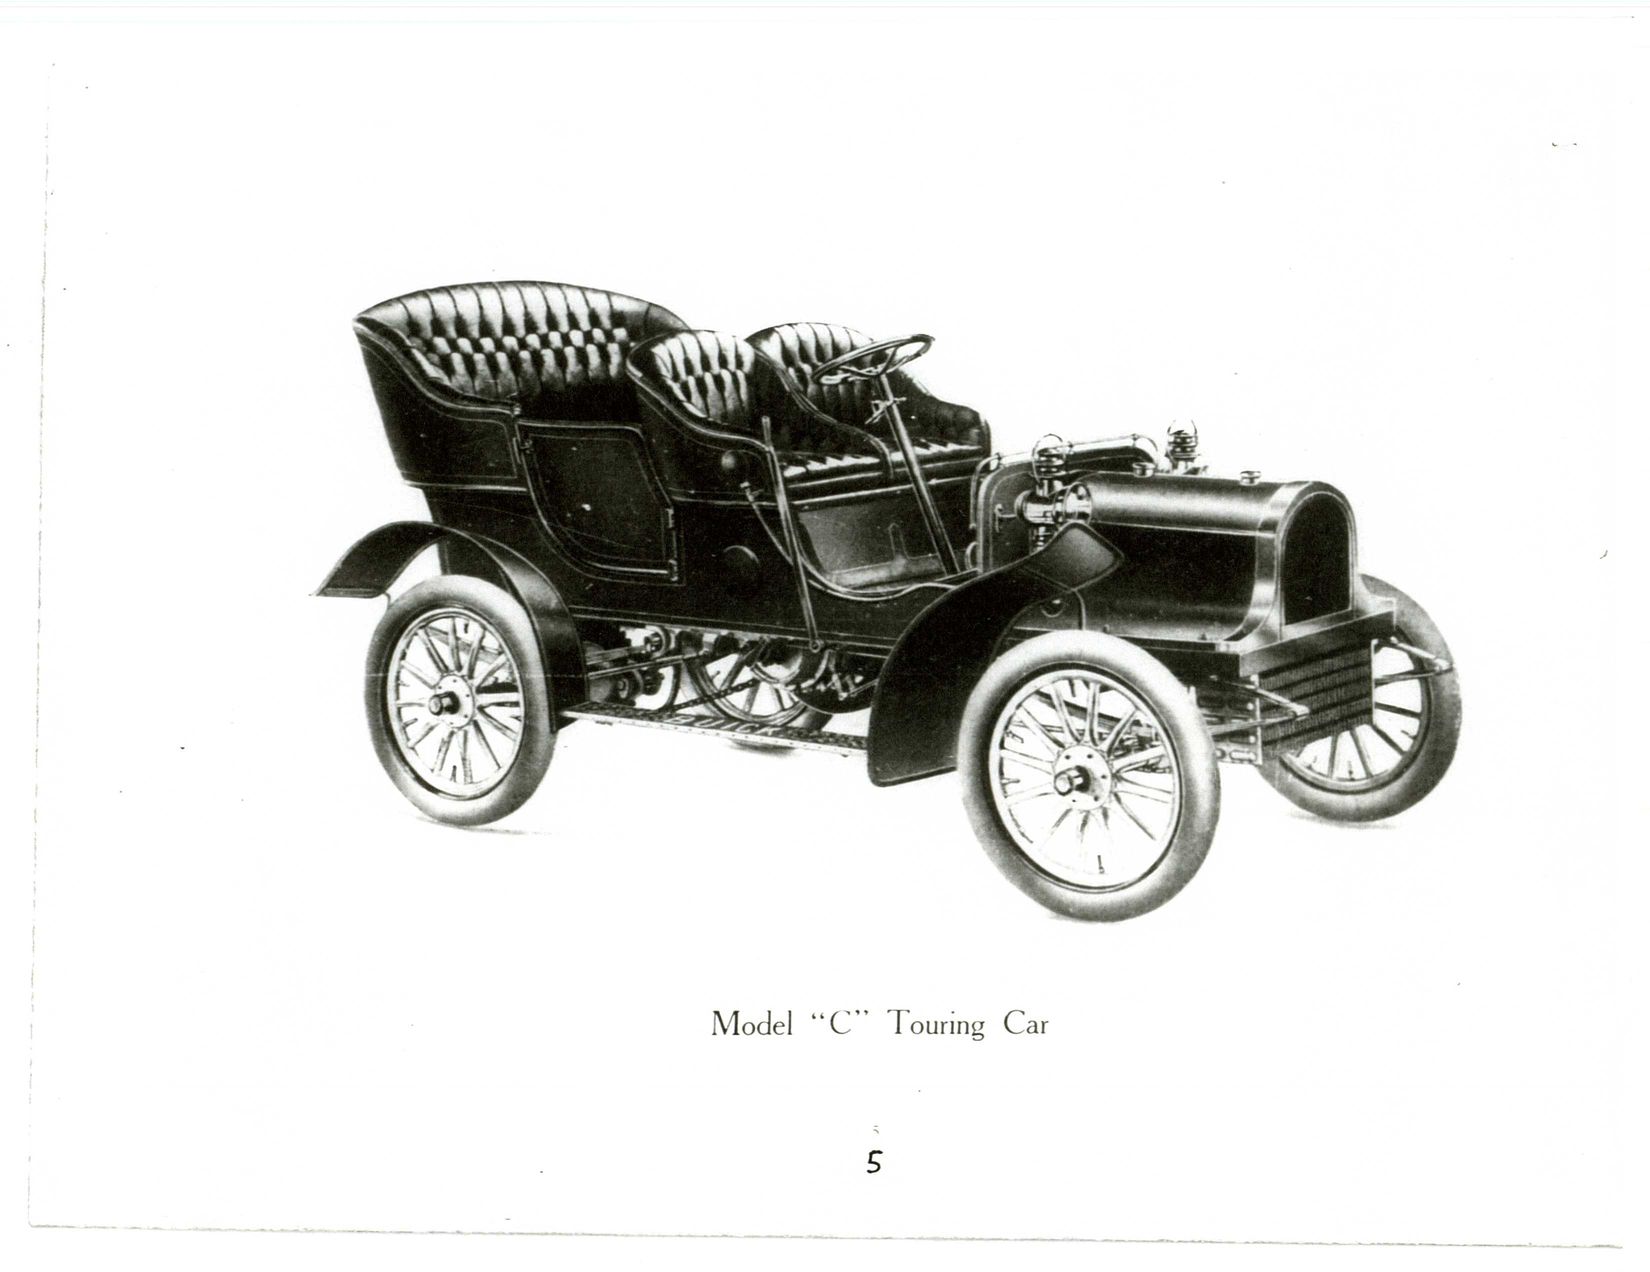 1905 Buick Catalogue-07